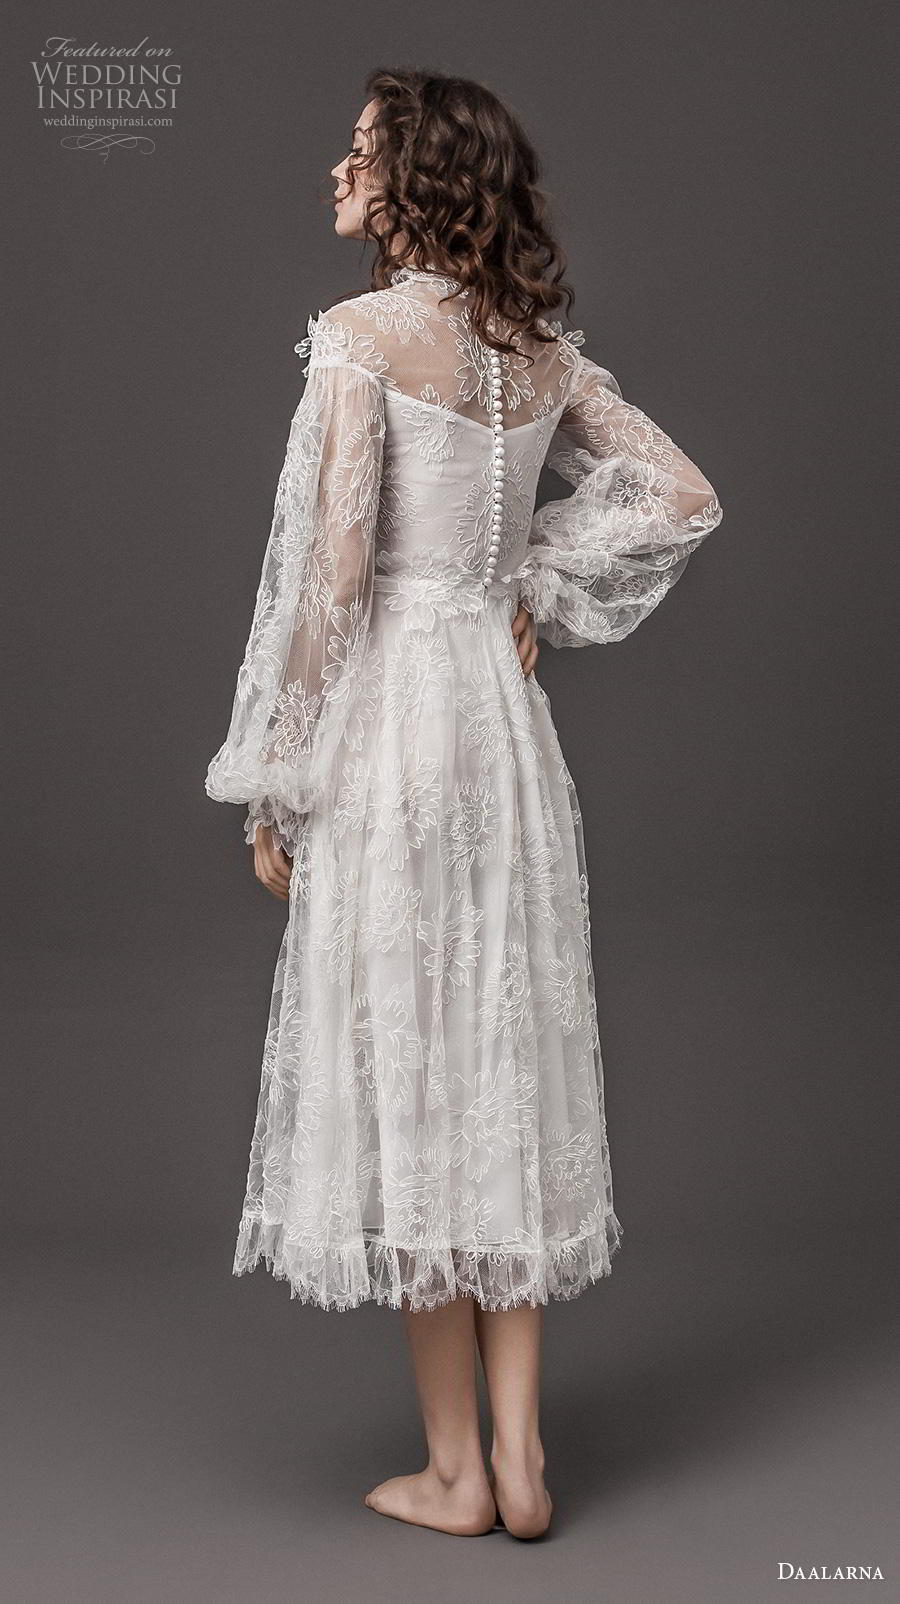 daalarna 2020 bridal long poet sleeves illusion high neck full embellishement romantic vintage tea length short wedding dress lace button back (14) bv